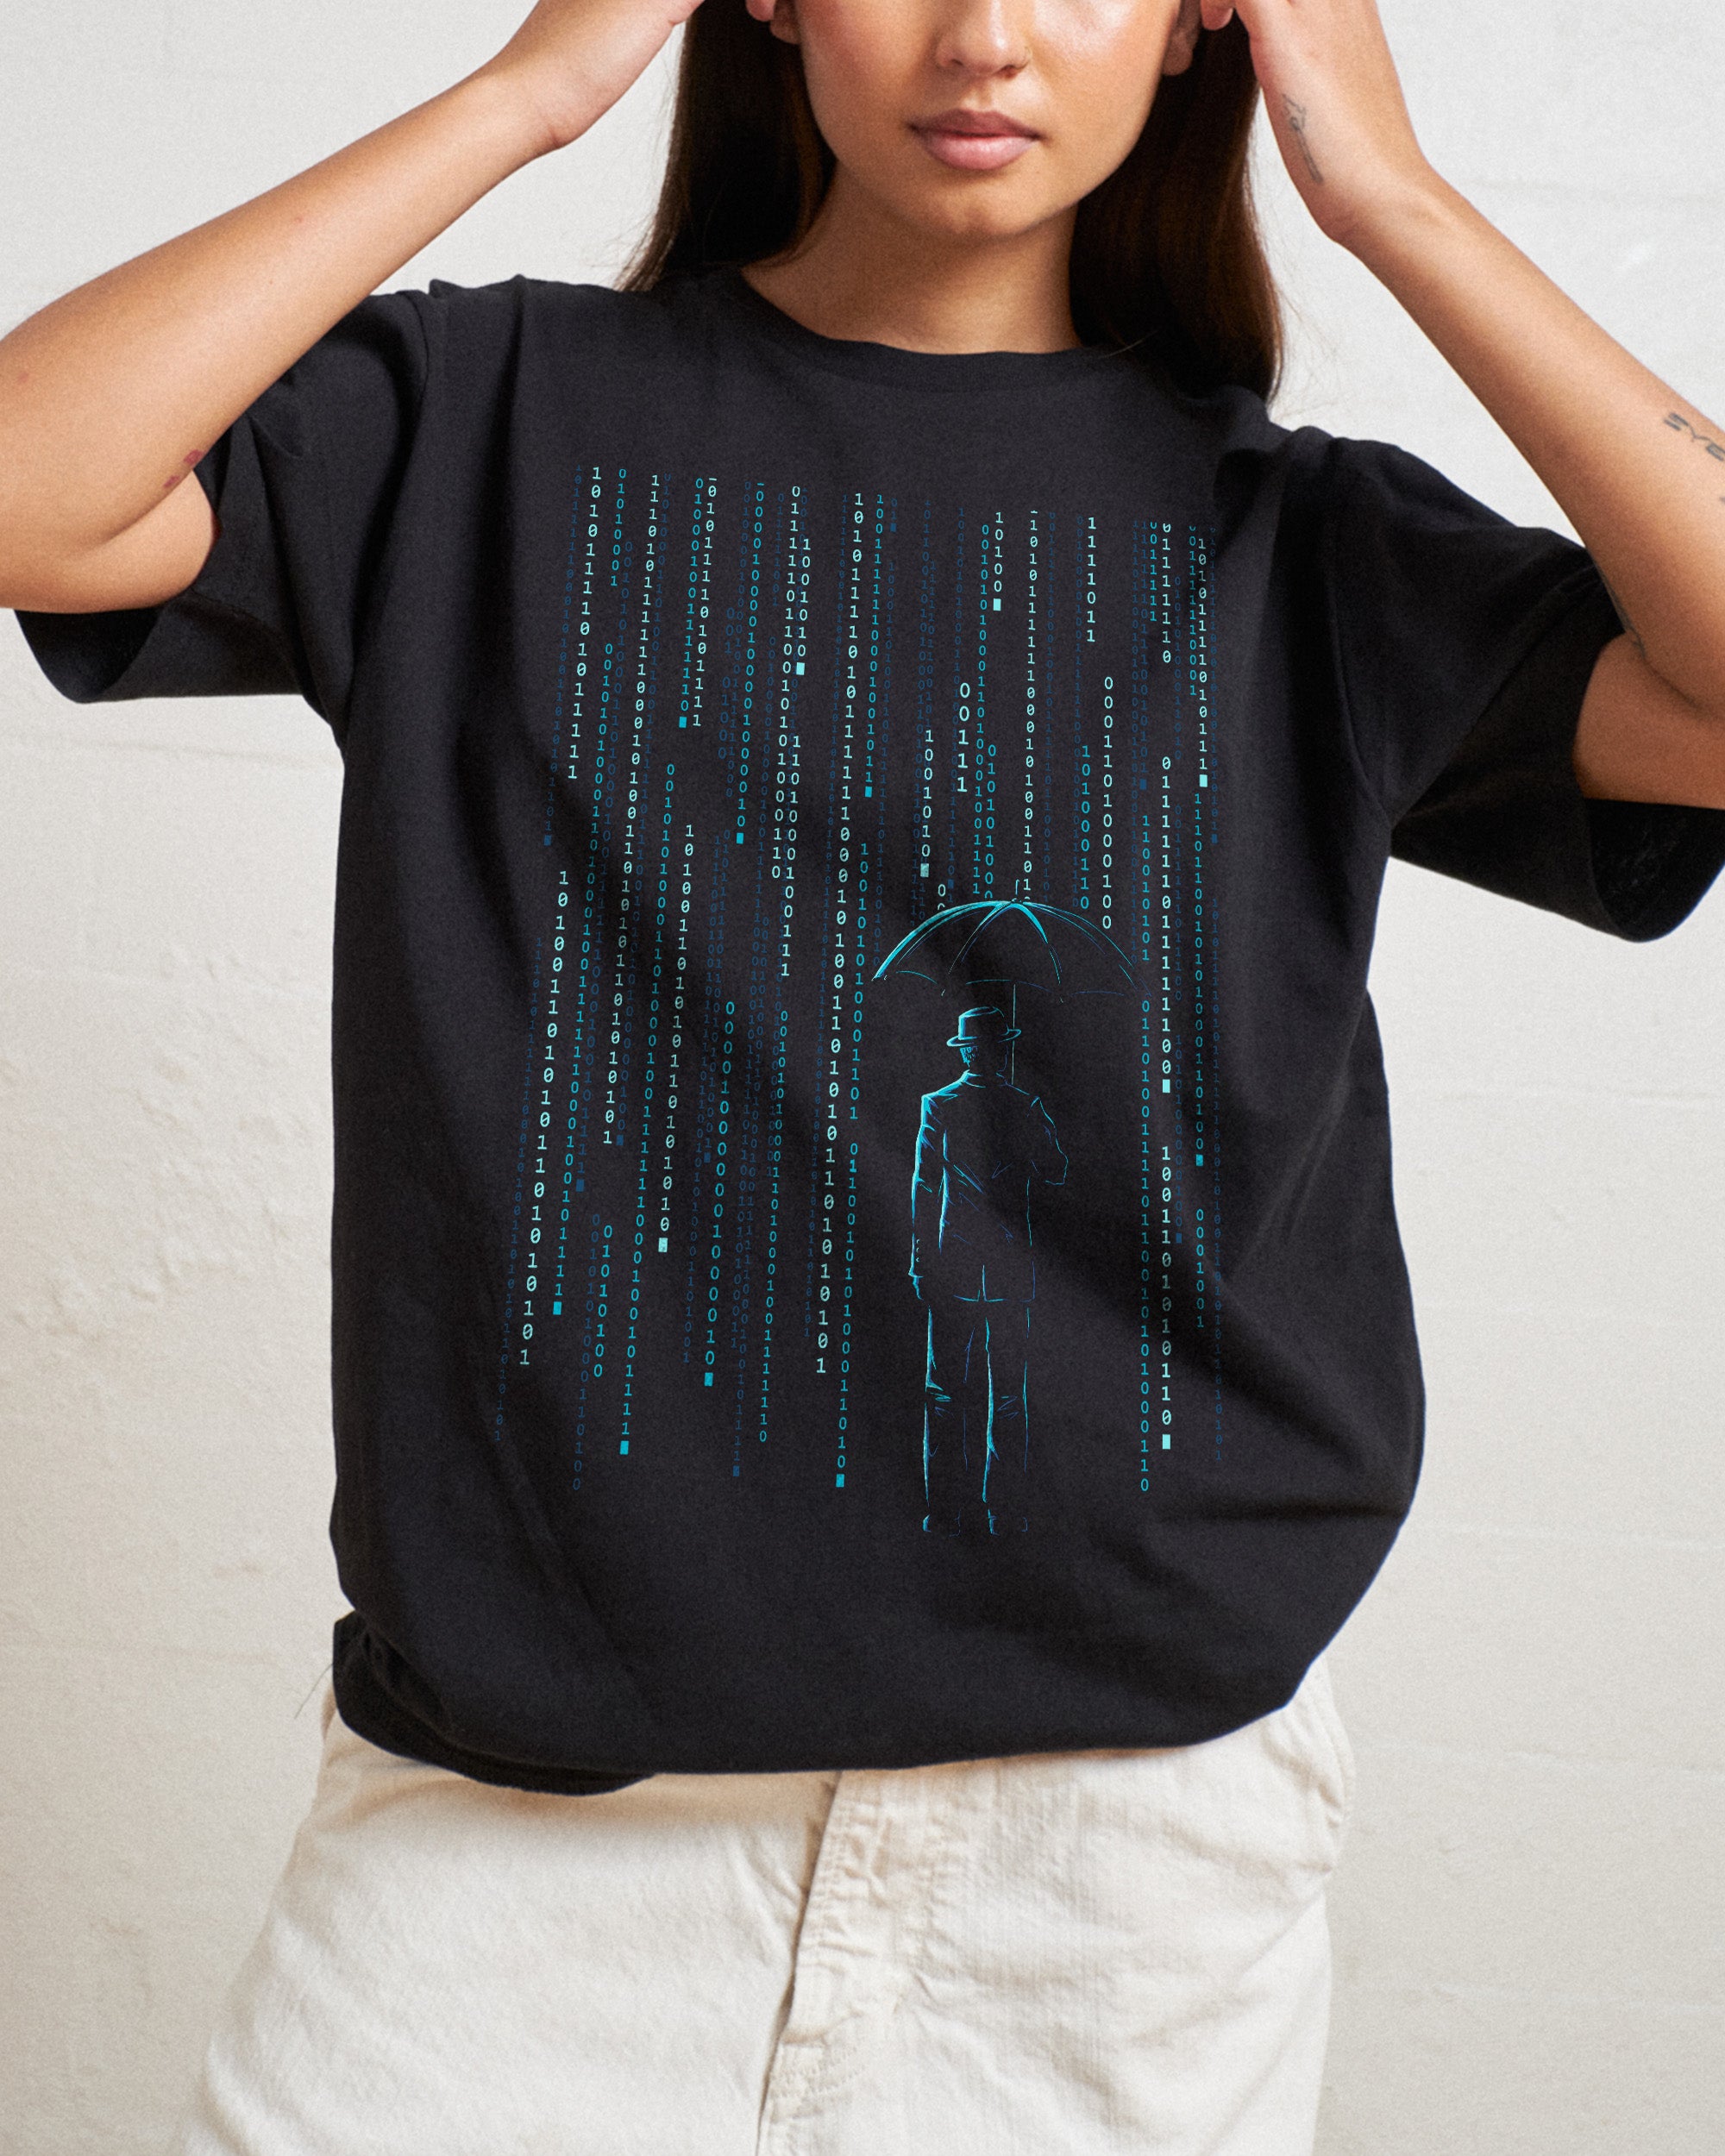 Digital Detox T-Shirt